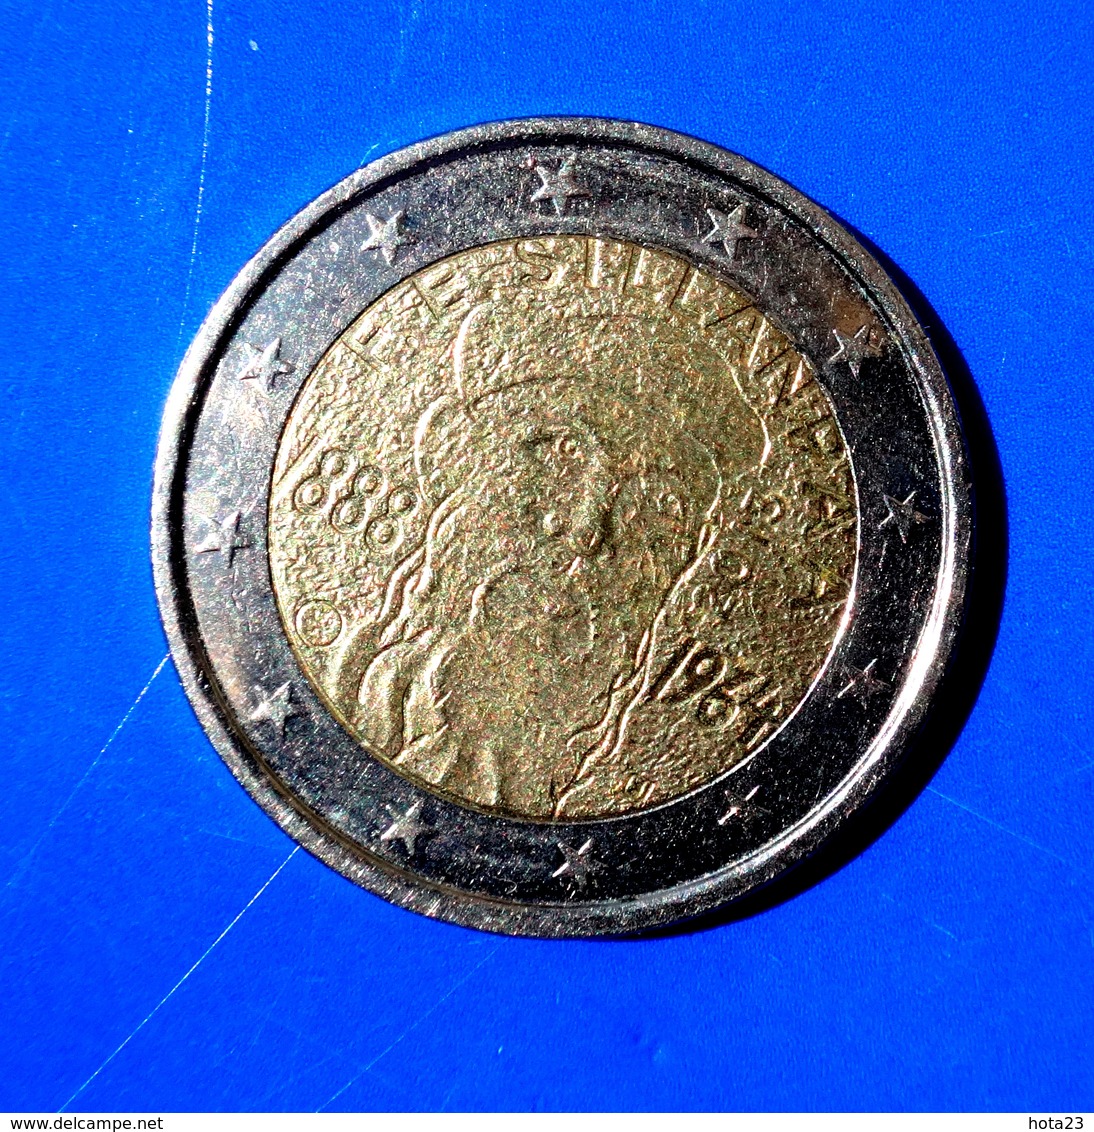 Finland 2 Euro Coin 2013 UNC The Nobel Laureate Frans Eemil Sillanpää  Circulated - Used - Finland